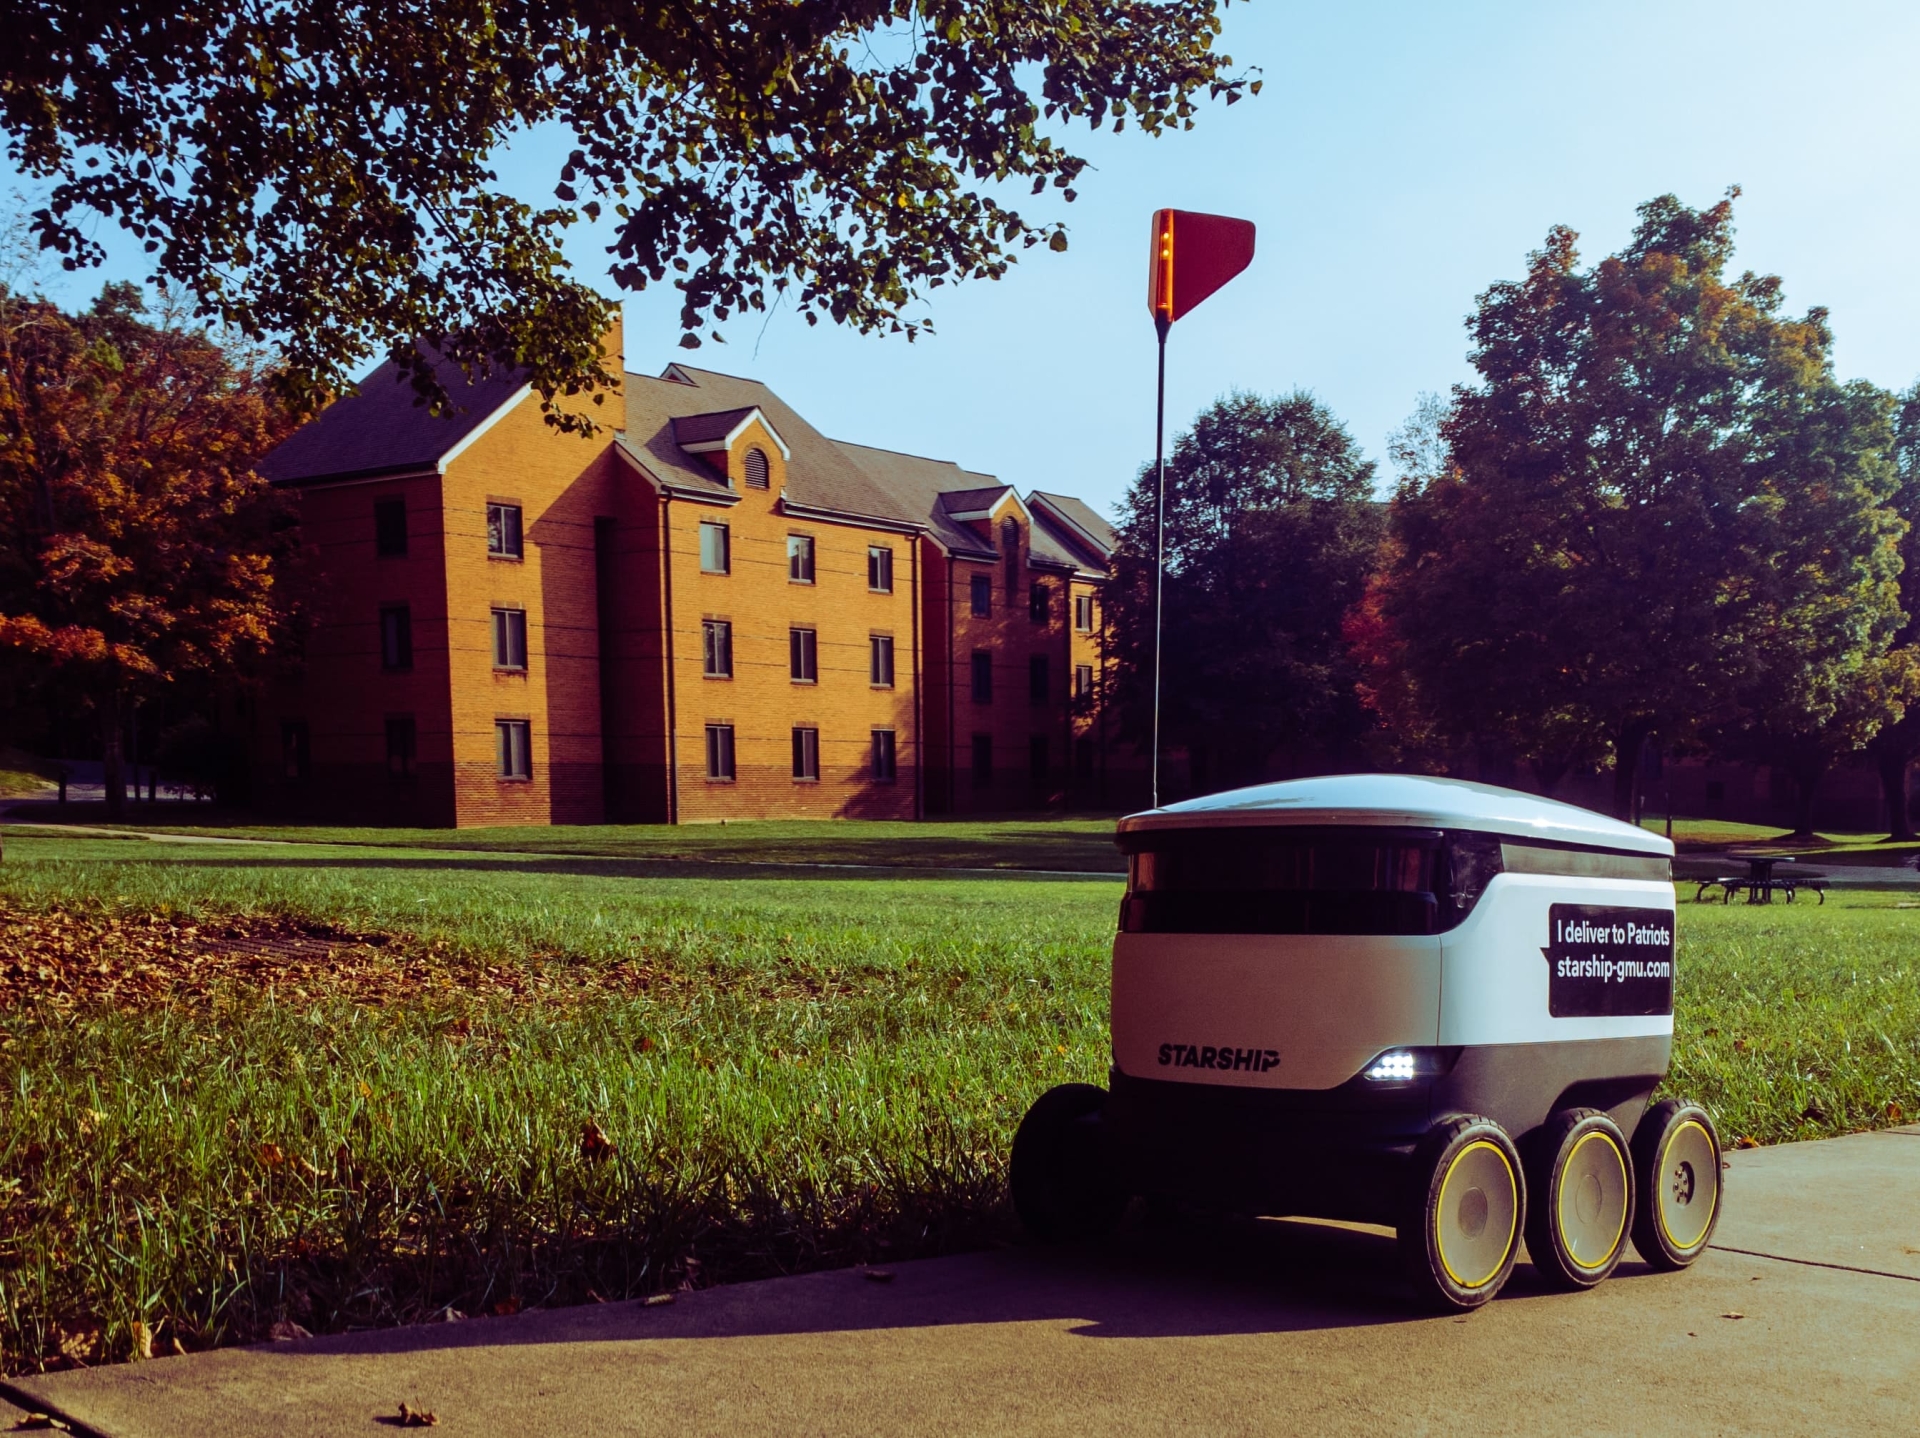 Self-Driving Food: Autonome Lieferung per Roboter